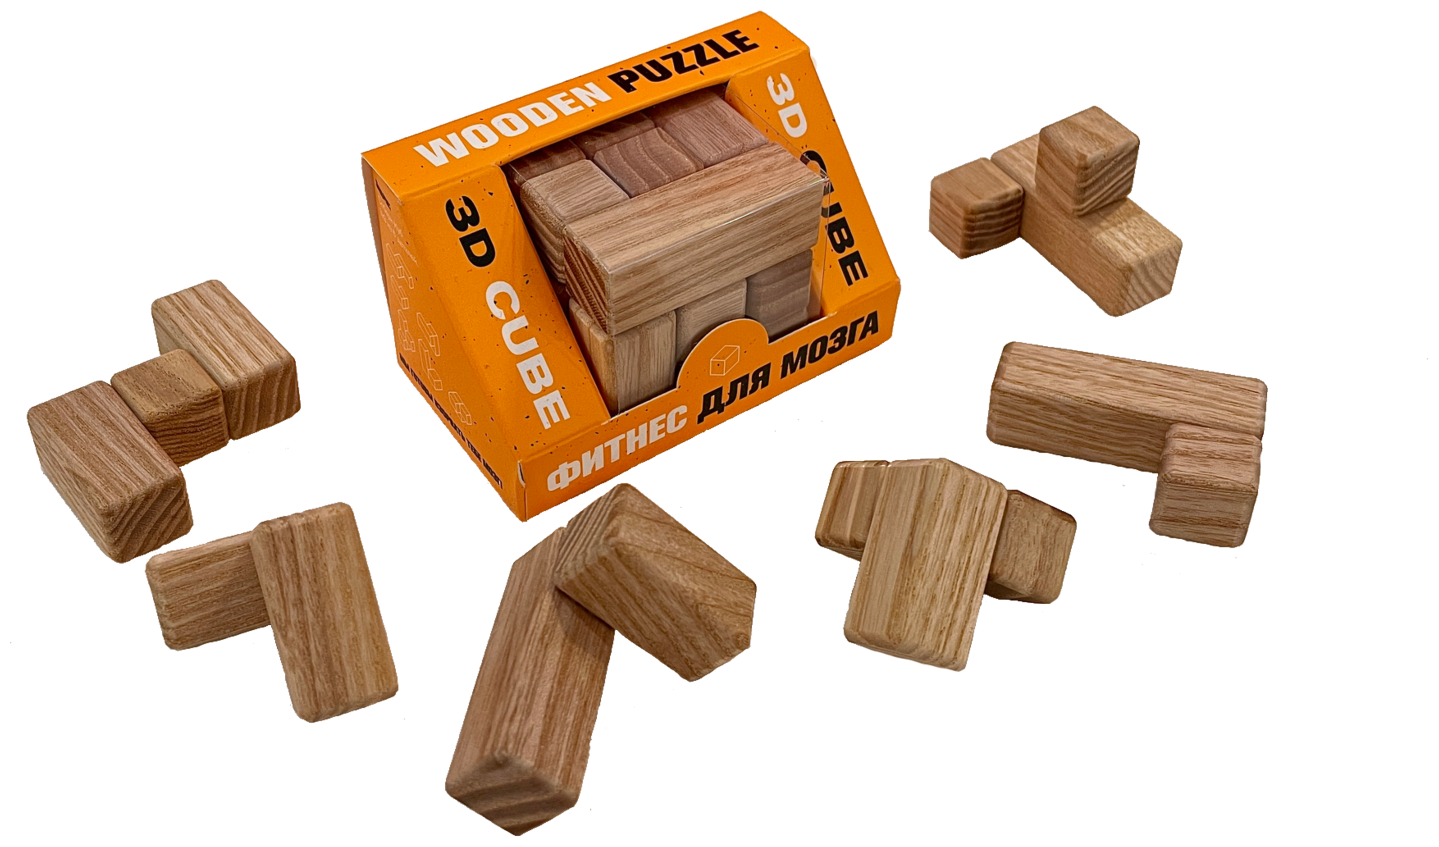 Головоломка IQ PUZZLE Фитнес для мозга Wooden 3D Cube бежевый — купить в интернет-магазине по низкой цене на Яндекс Маркете